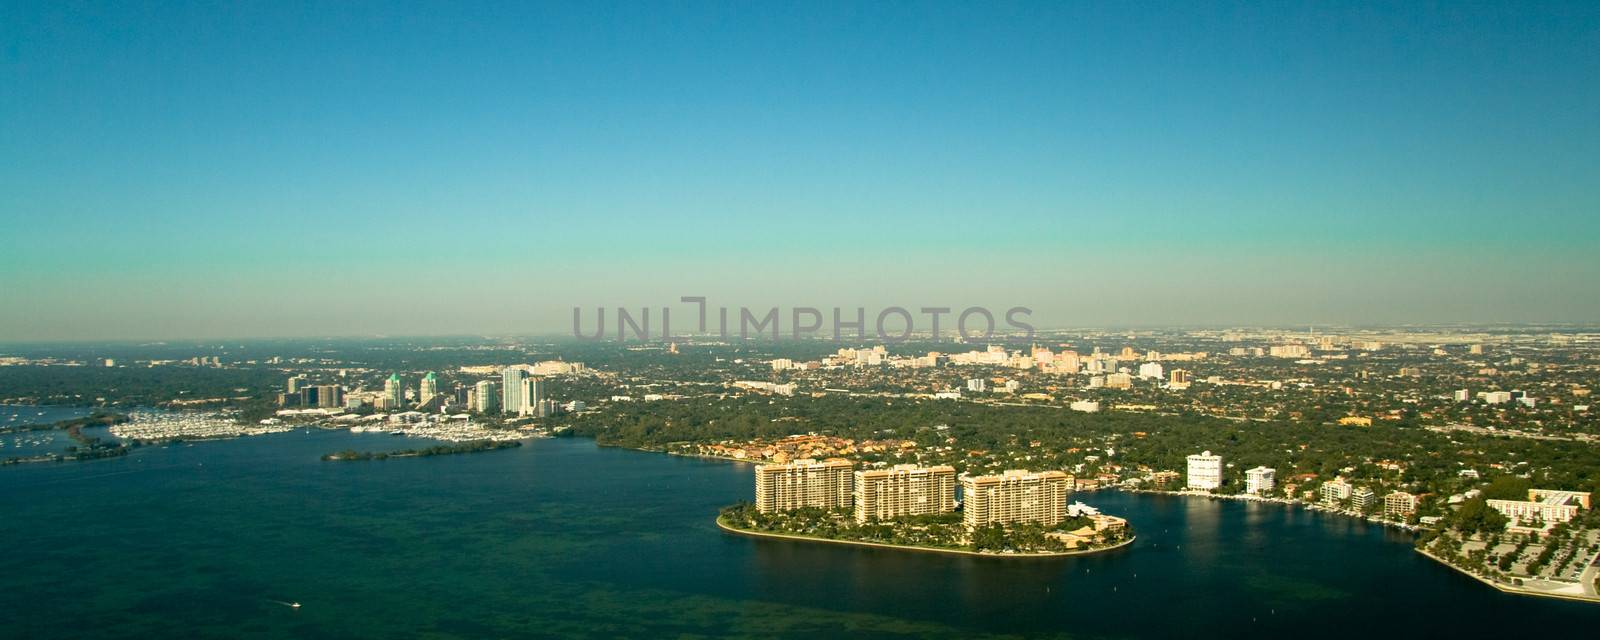 Panoramic aerial view of Miami city coastline, Florida, U.S.A.